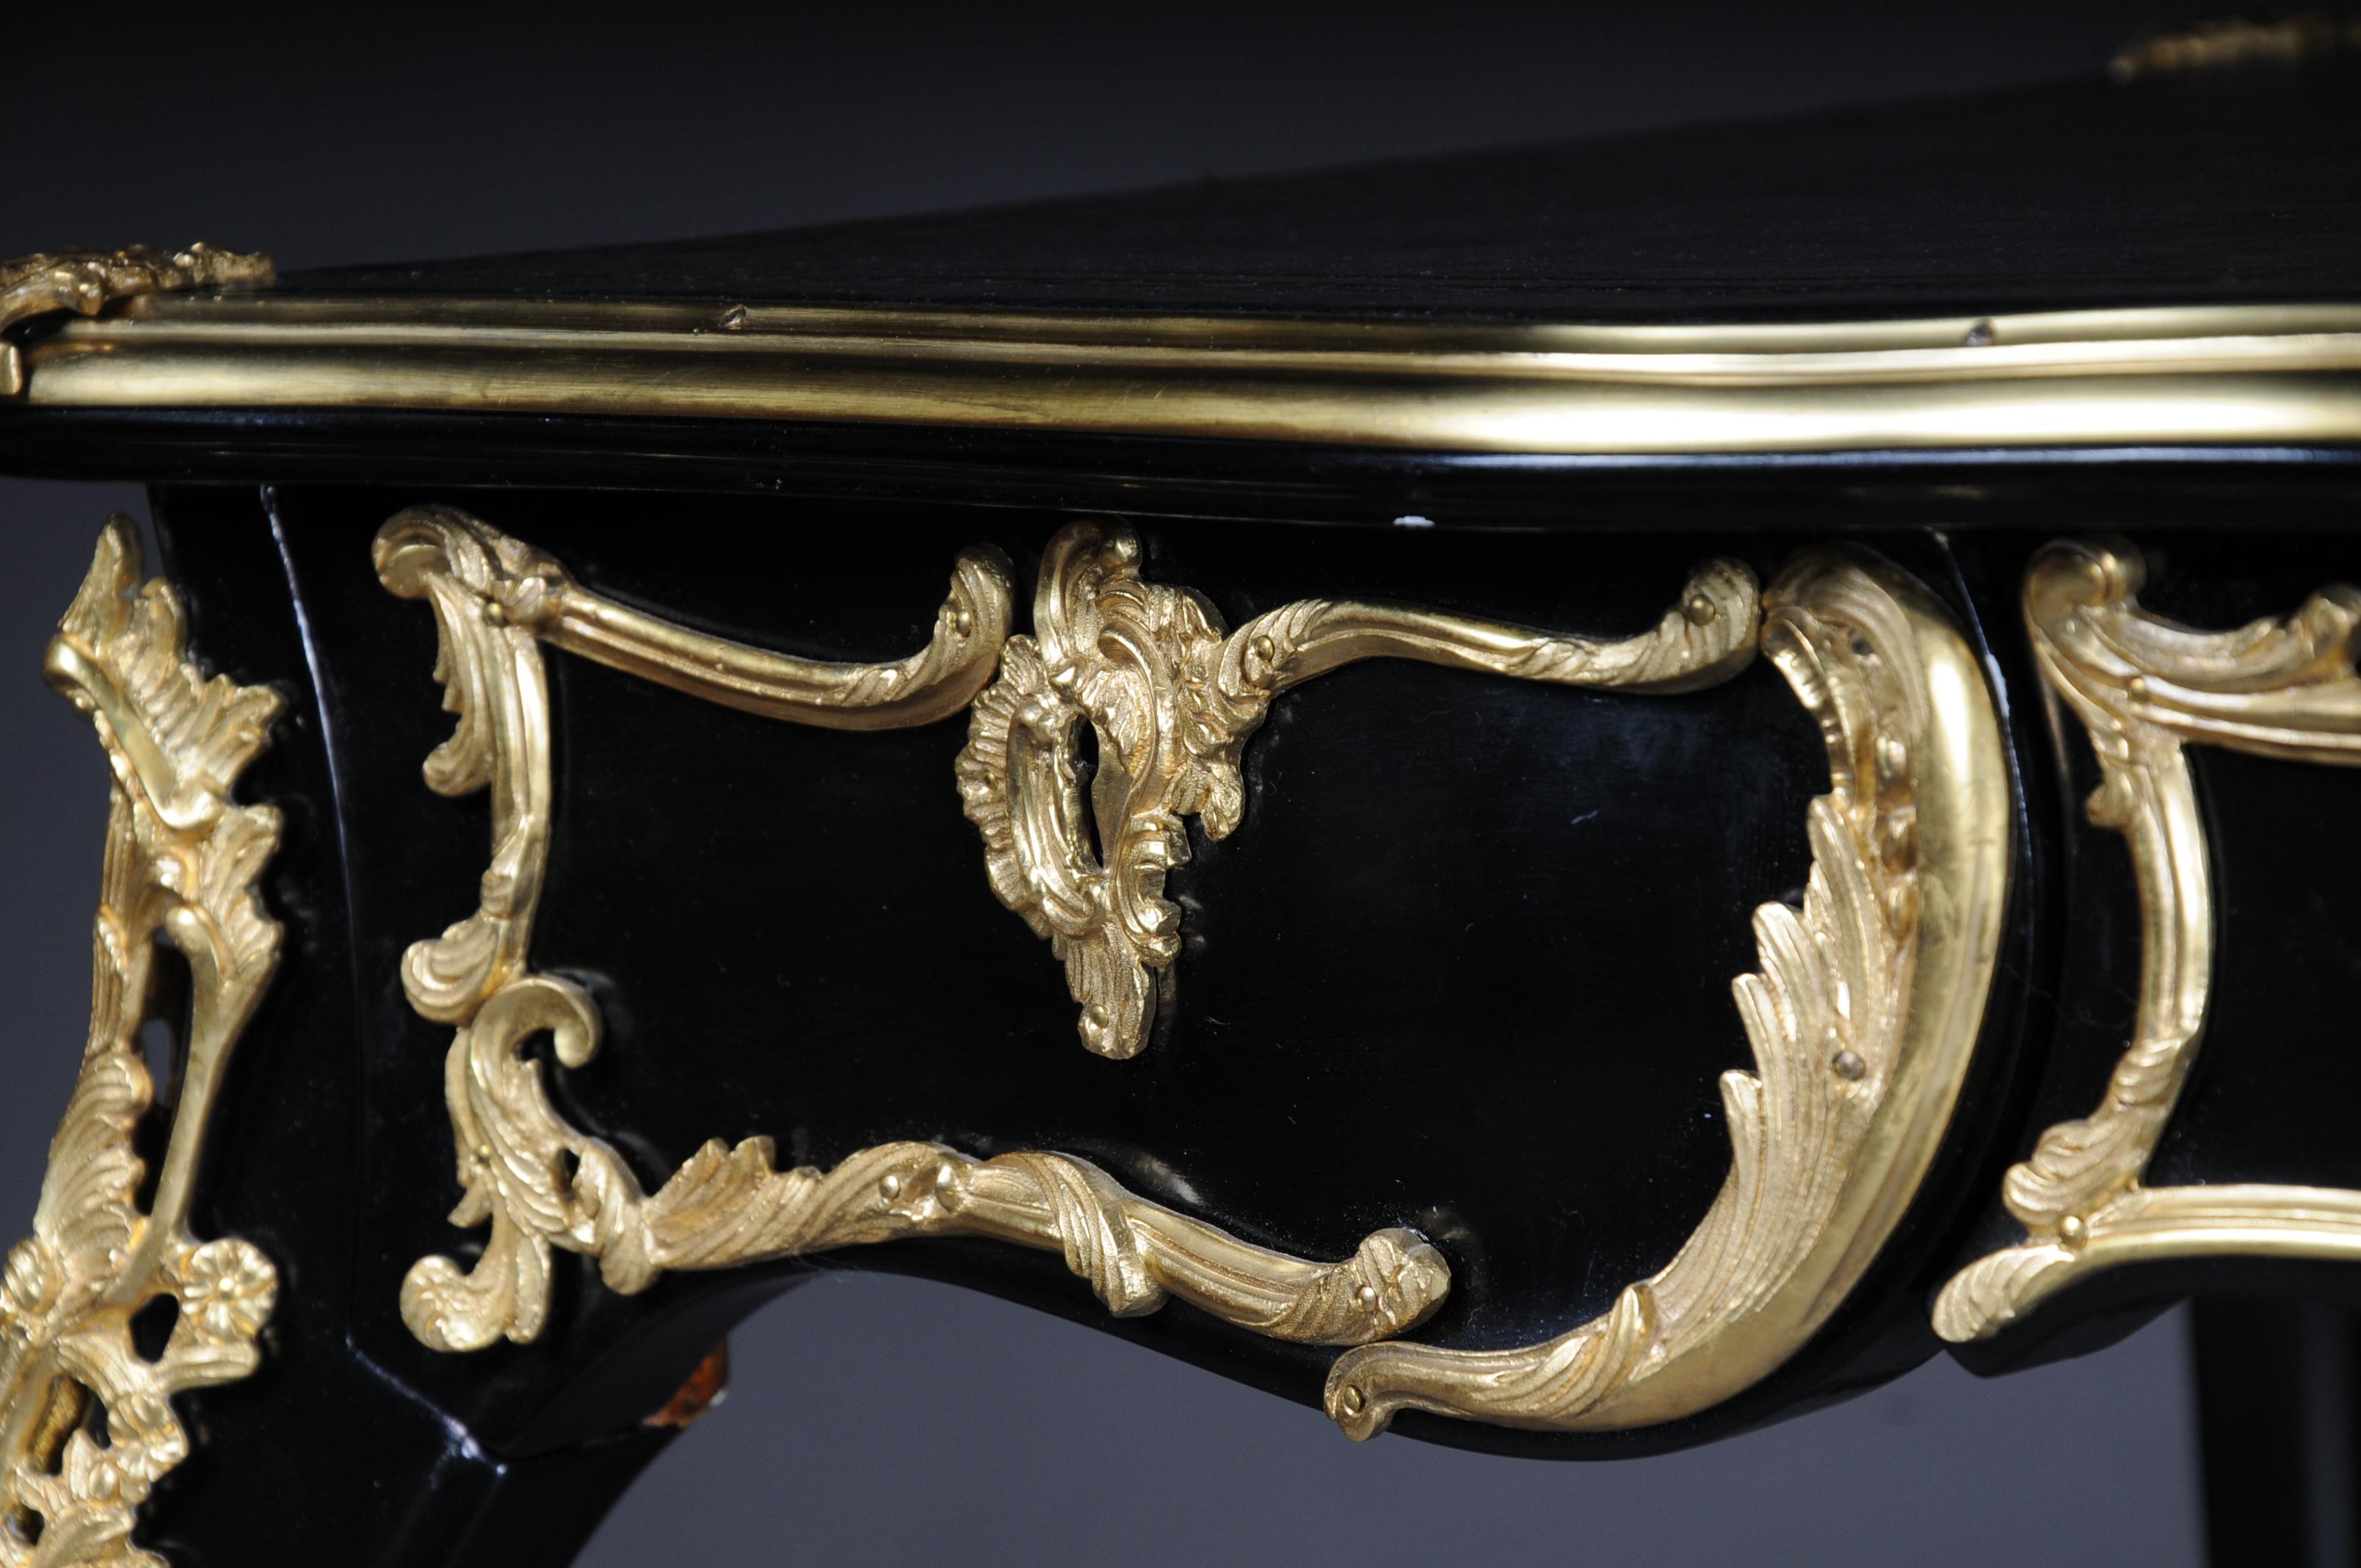 20th Century Elegant Black Bureau Plat / Writing Desk in Louis XV, Beech For Sale 5